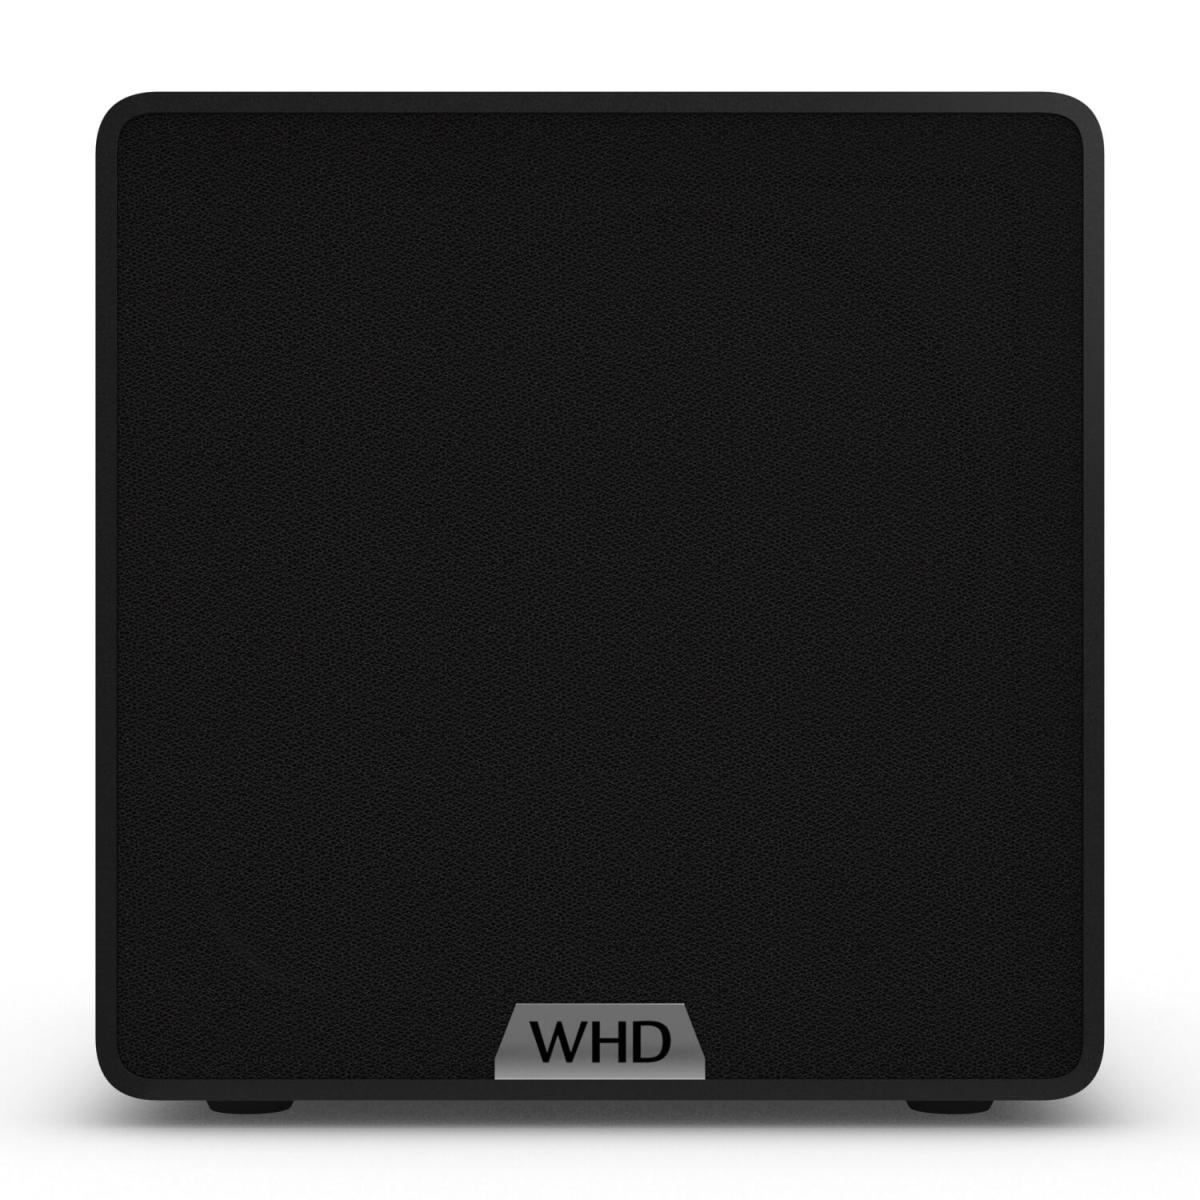 WHD | Qube L WLAN Streaming Lautsprecher (Aluminiumgehäuse schwarz)